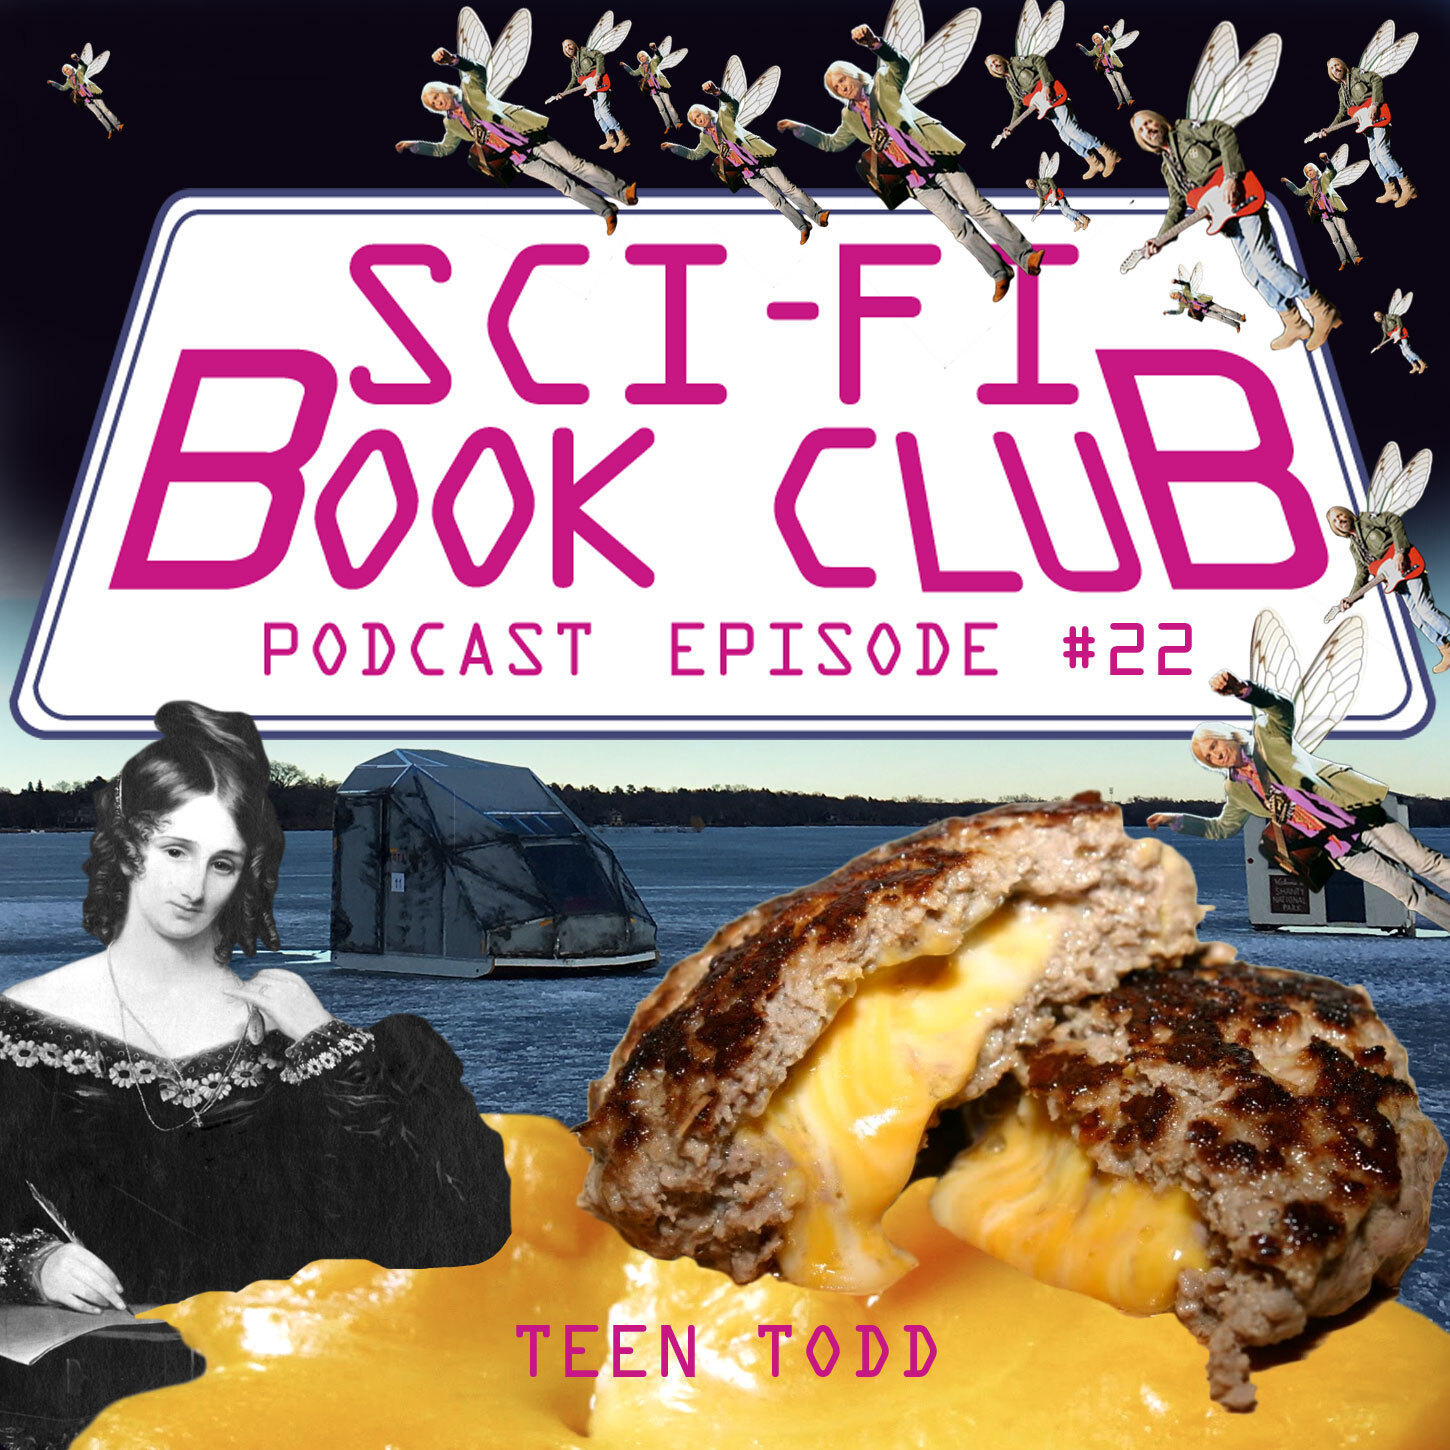 Sci-Fi Book Club Podcast #22: Teen Todd